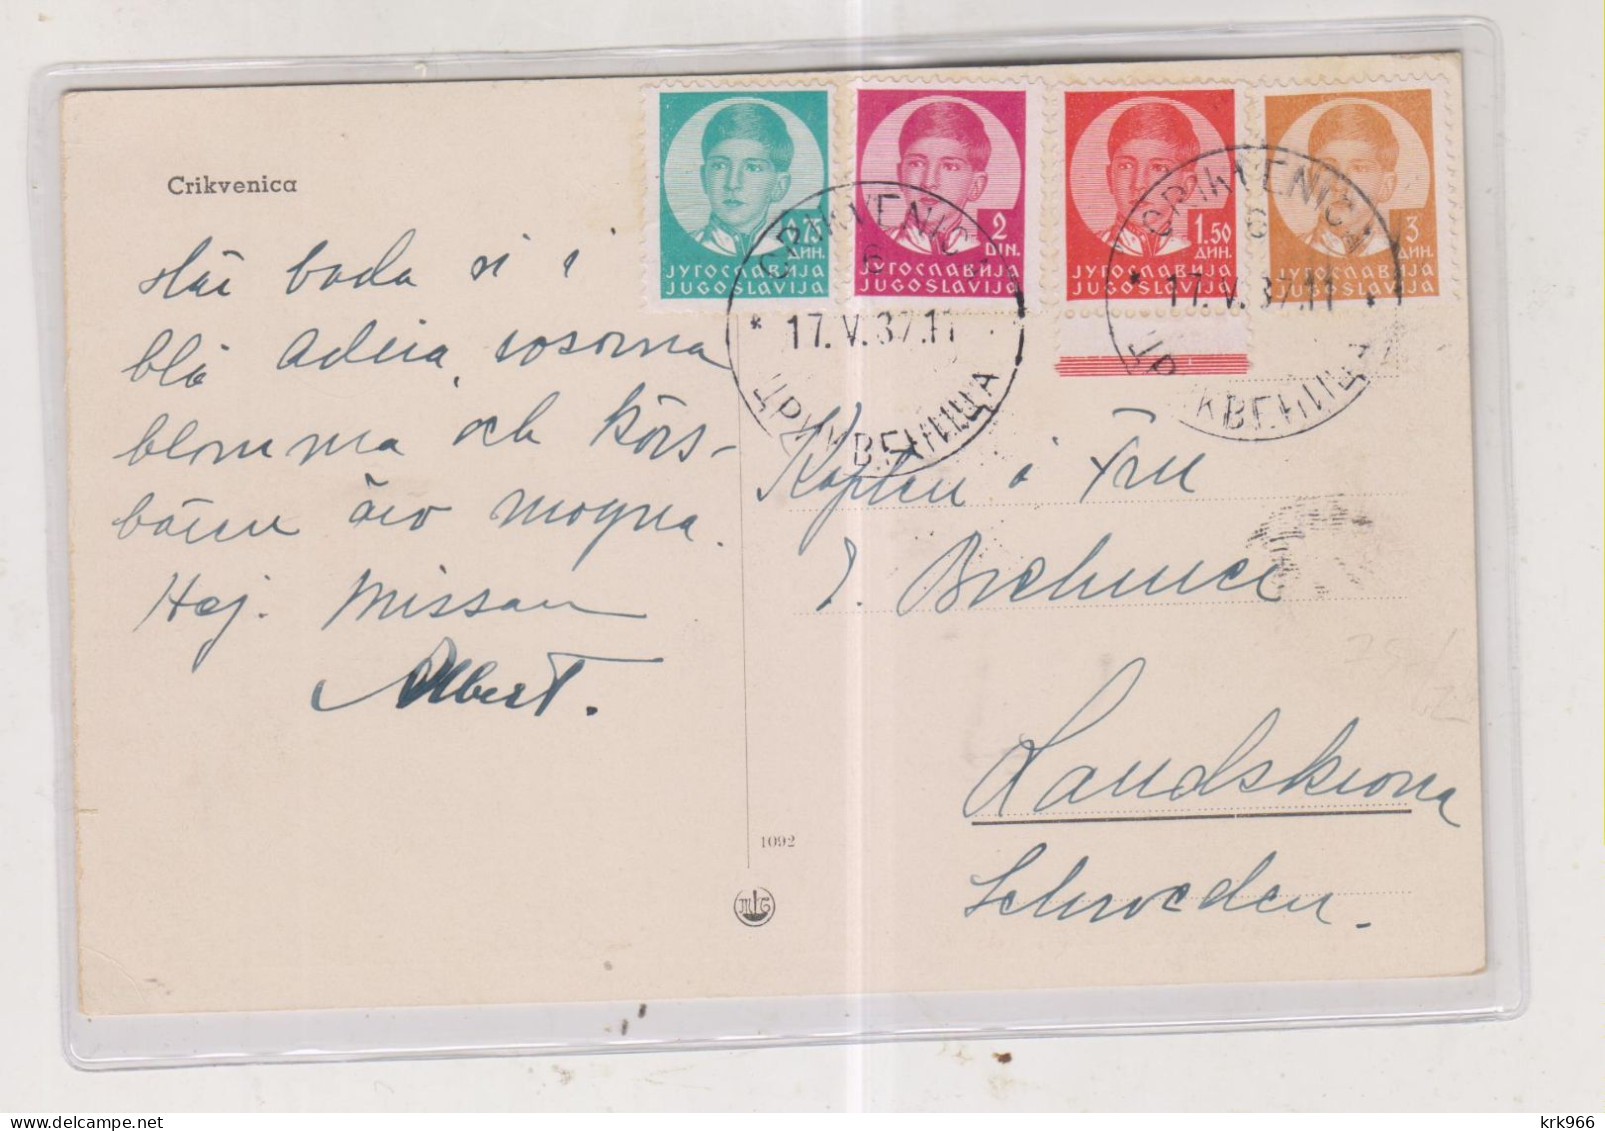 YUGOSLAVIA,1937 CRIKVENICA Nice Postcard To Sweden - Lettres & Documents